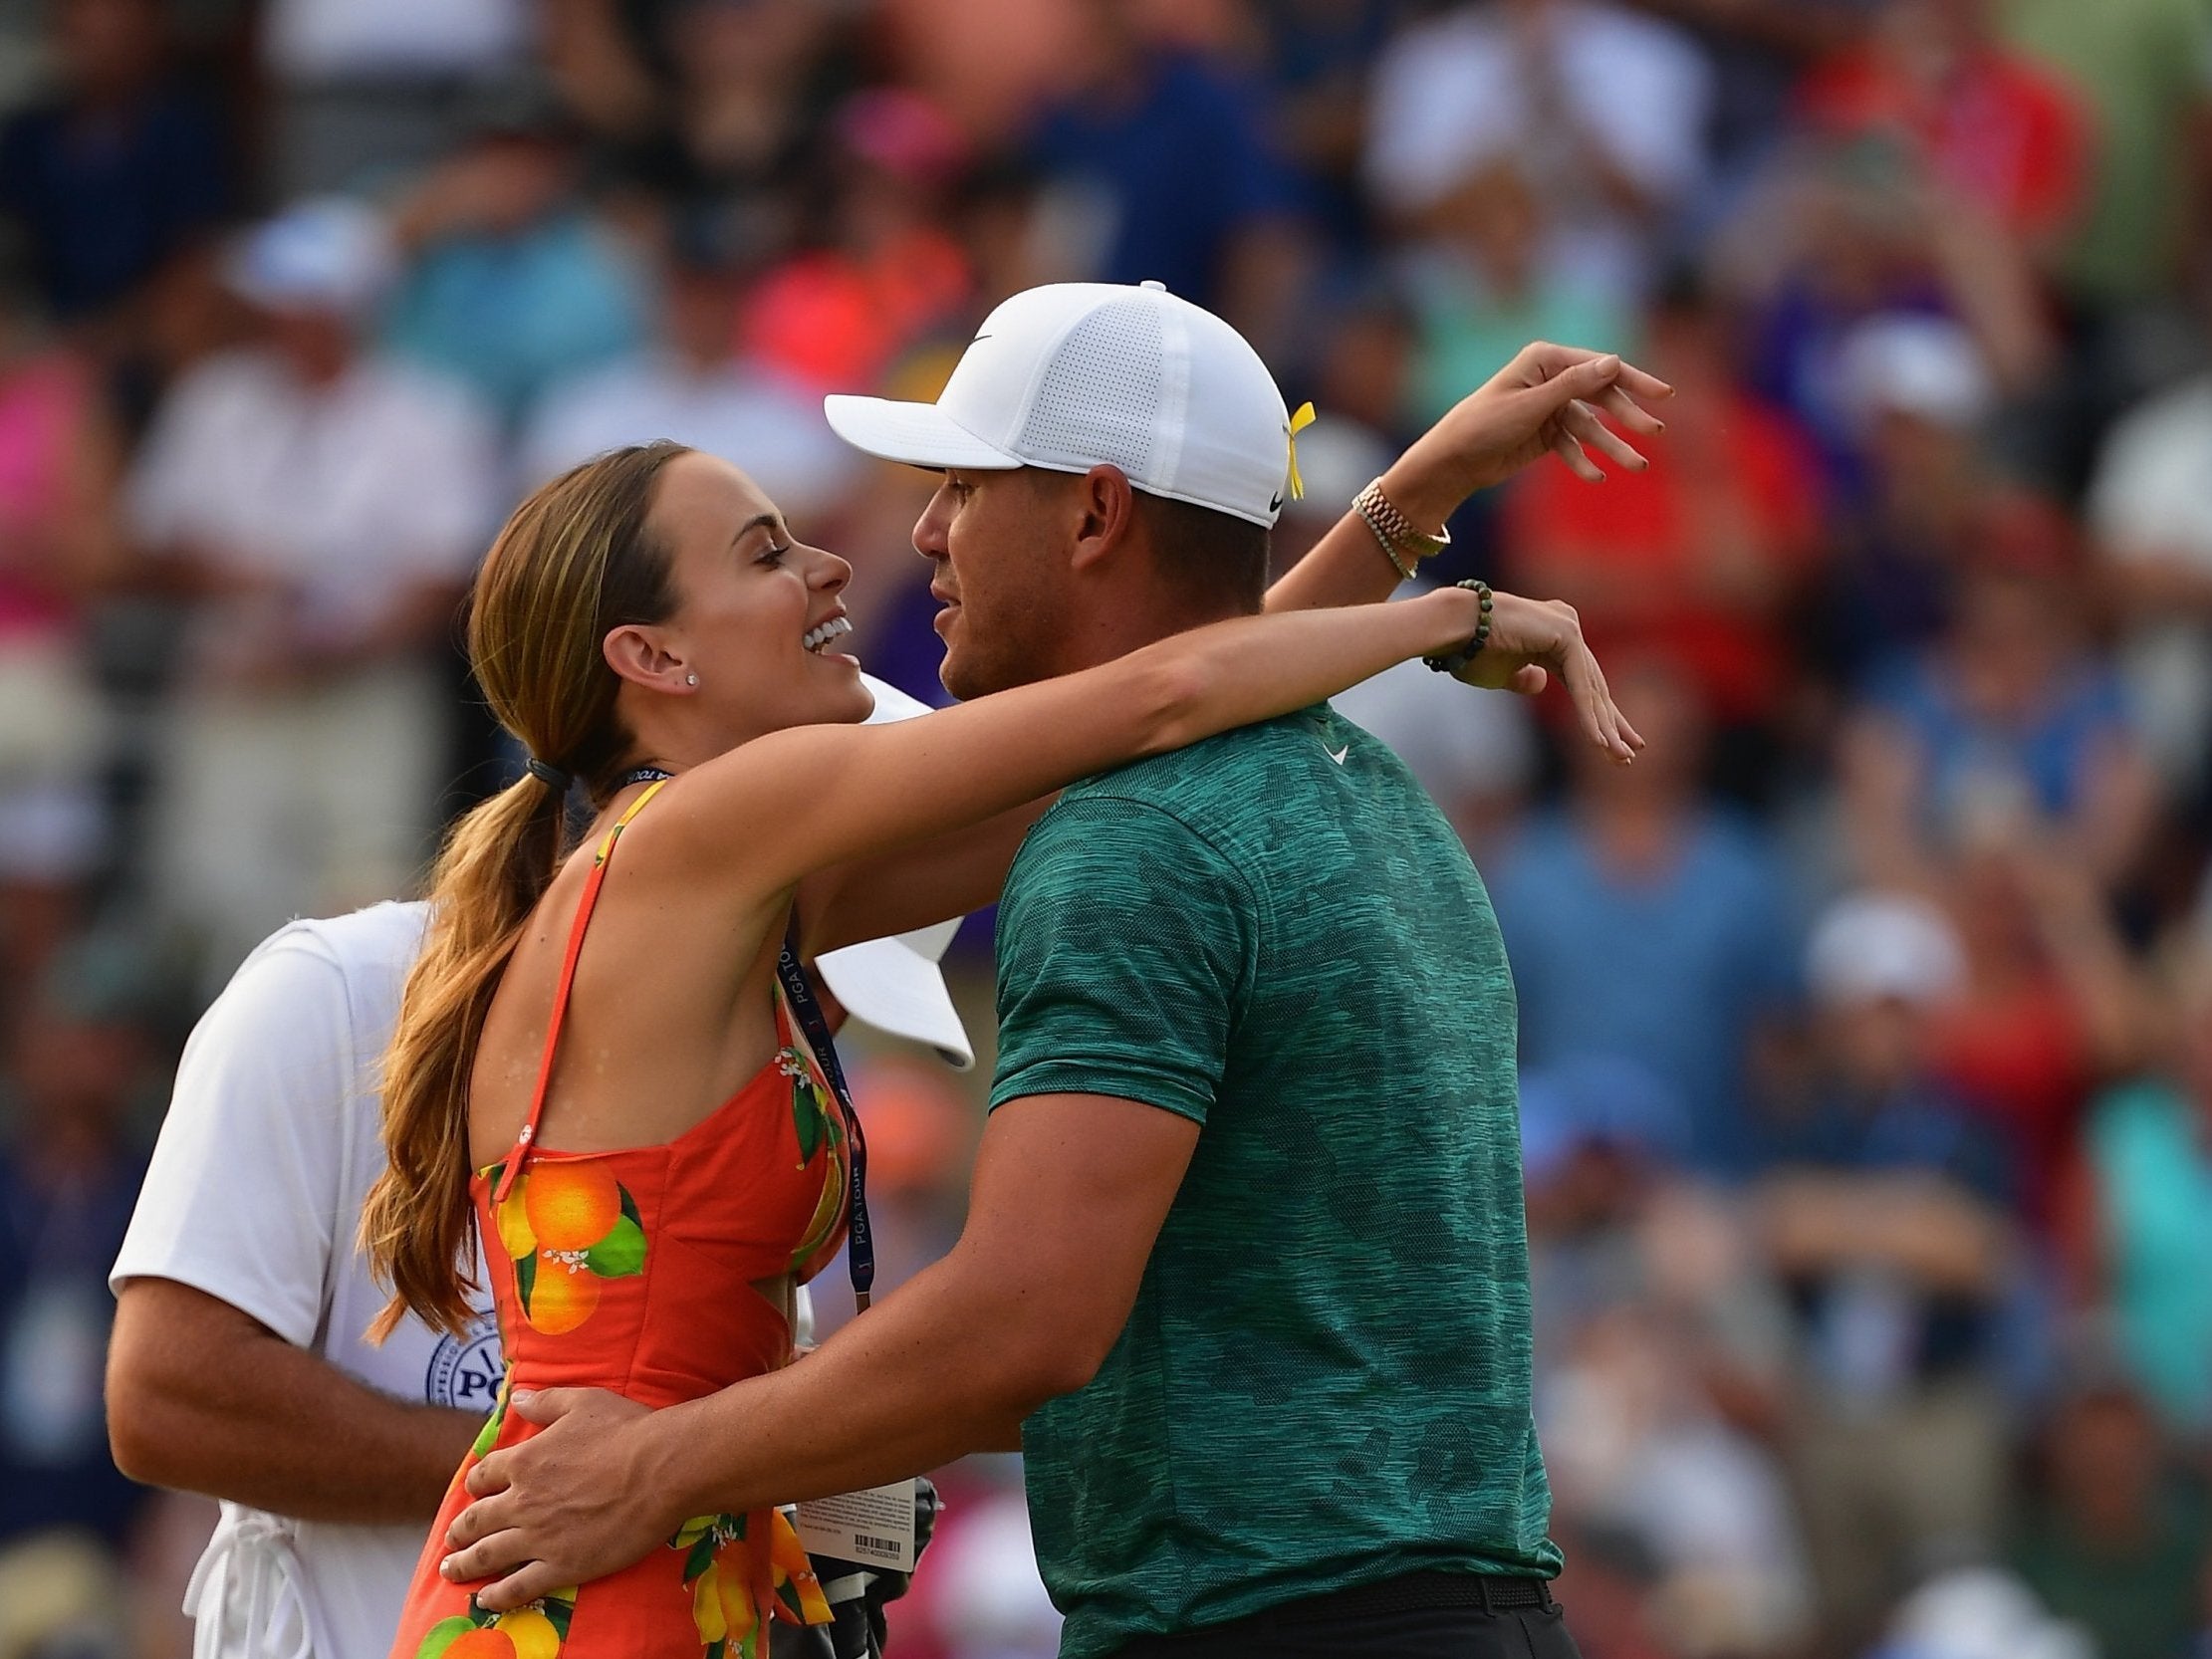 Brooks Koepka celebrates with his girlfriend, Jena Sims, after winning the 2018 PGA Championship